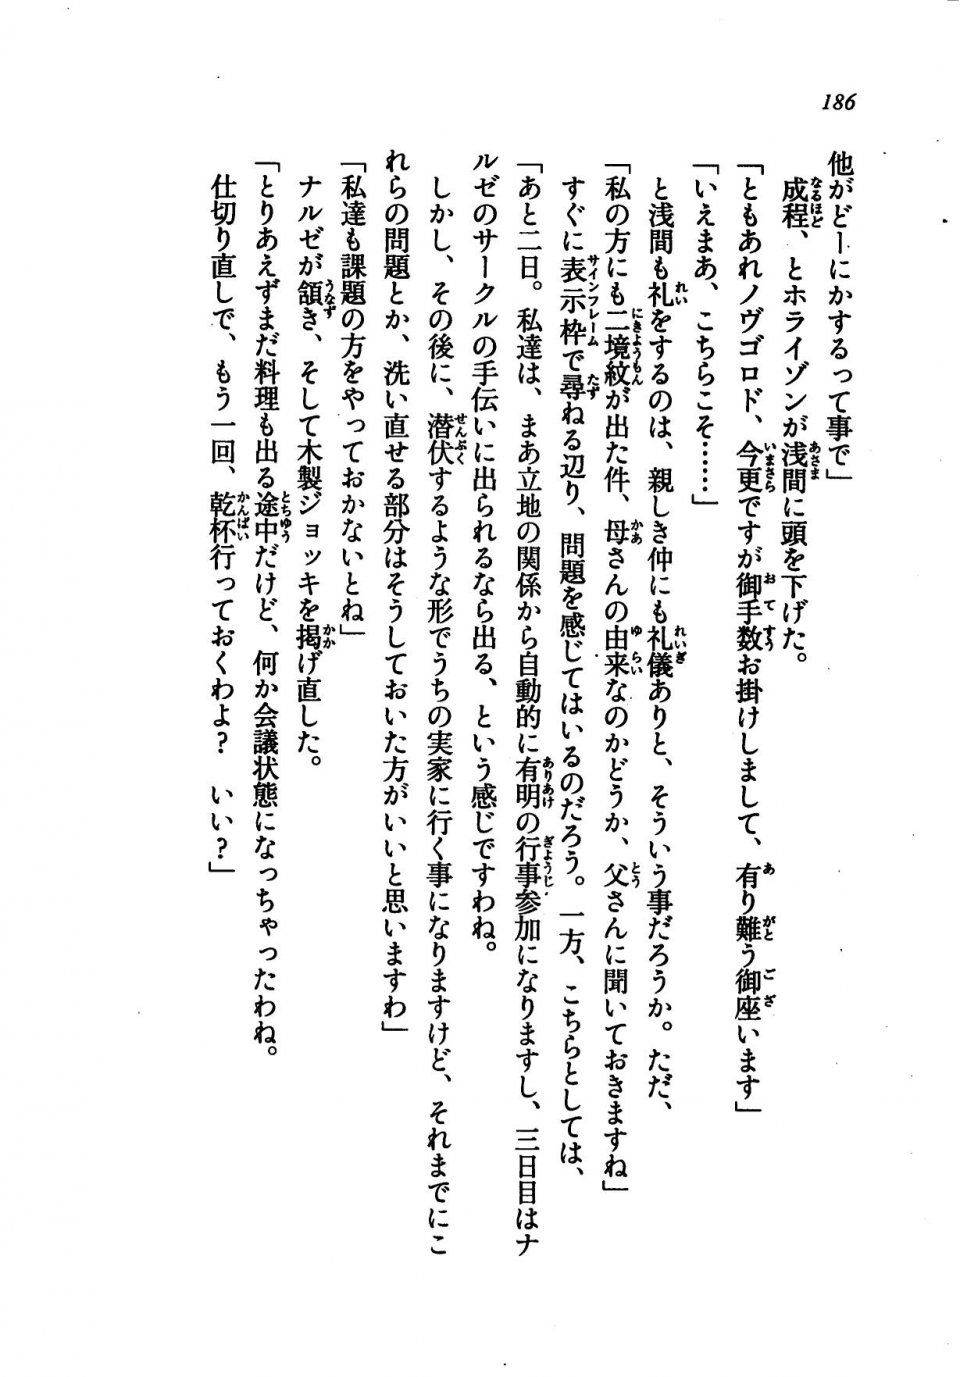 Kyoukai Senjou no Horizon LN Vol 21(8C) Part 1 - Photo #185